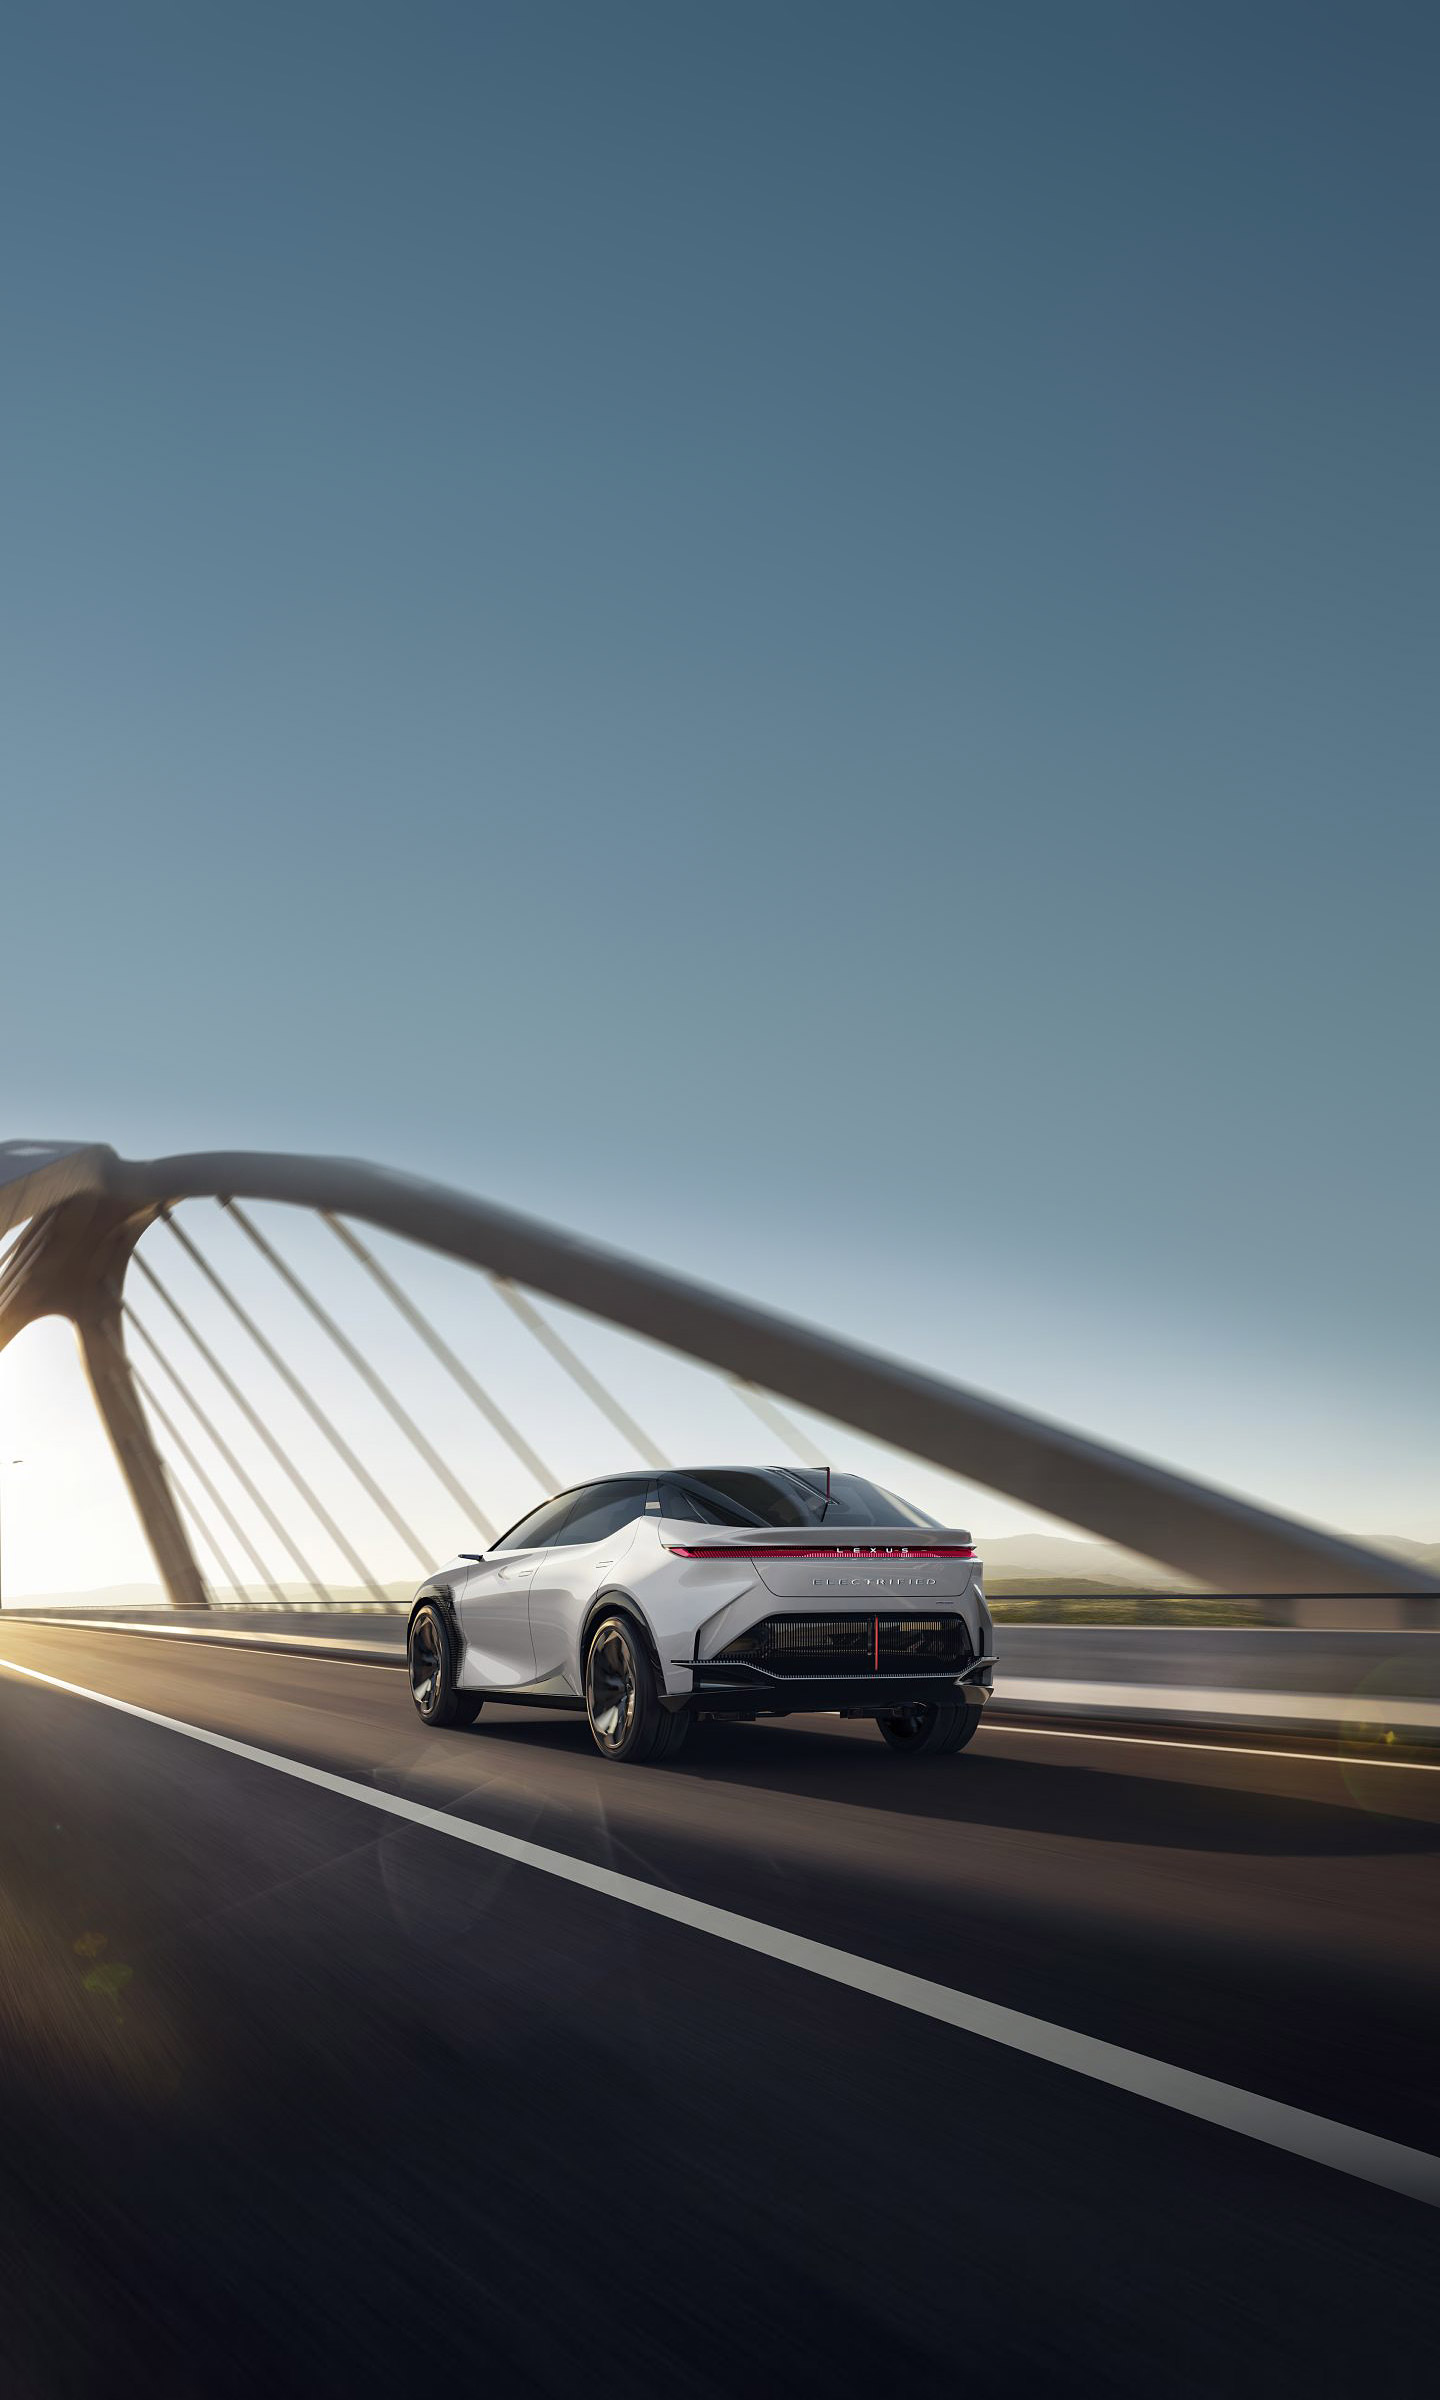  2021 Lexus LF-Z Electrified Concept Wallpaper.